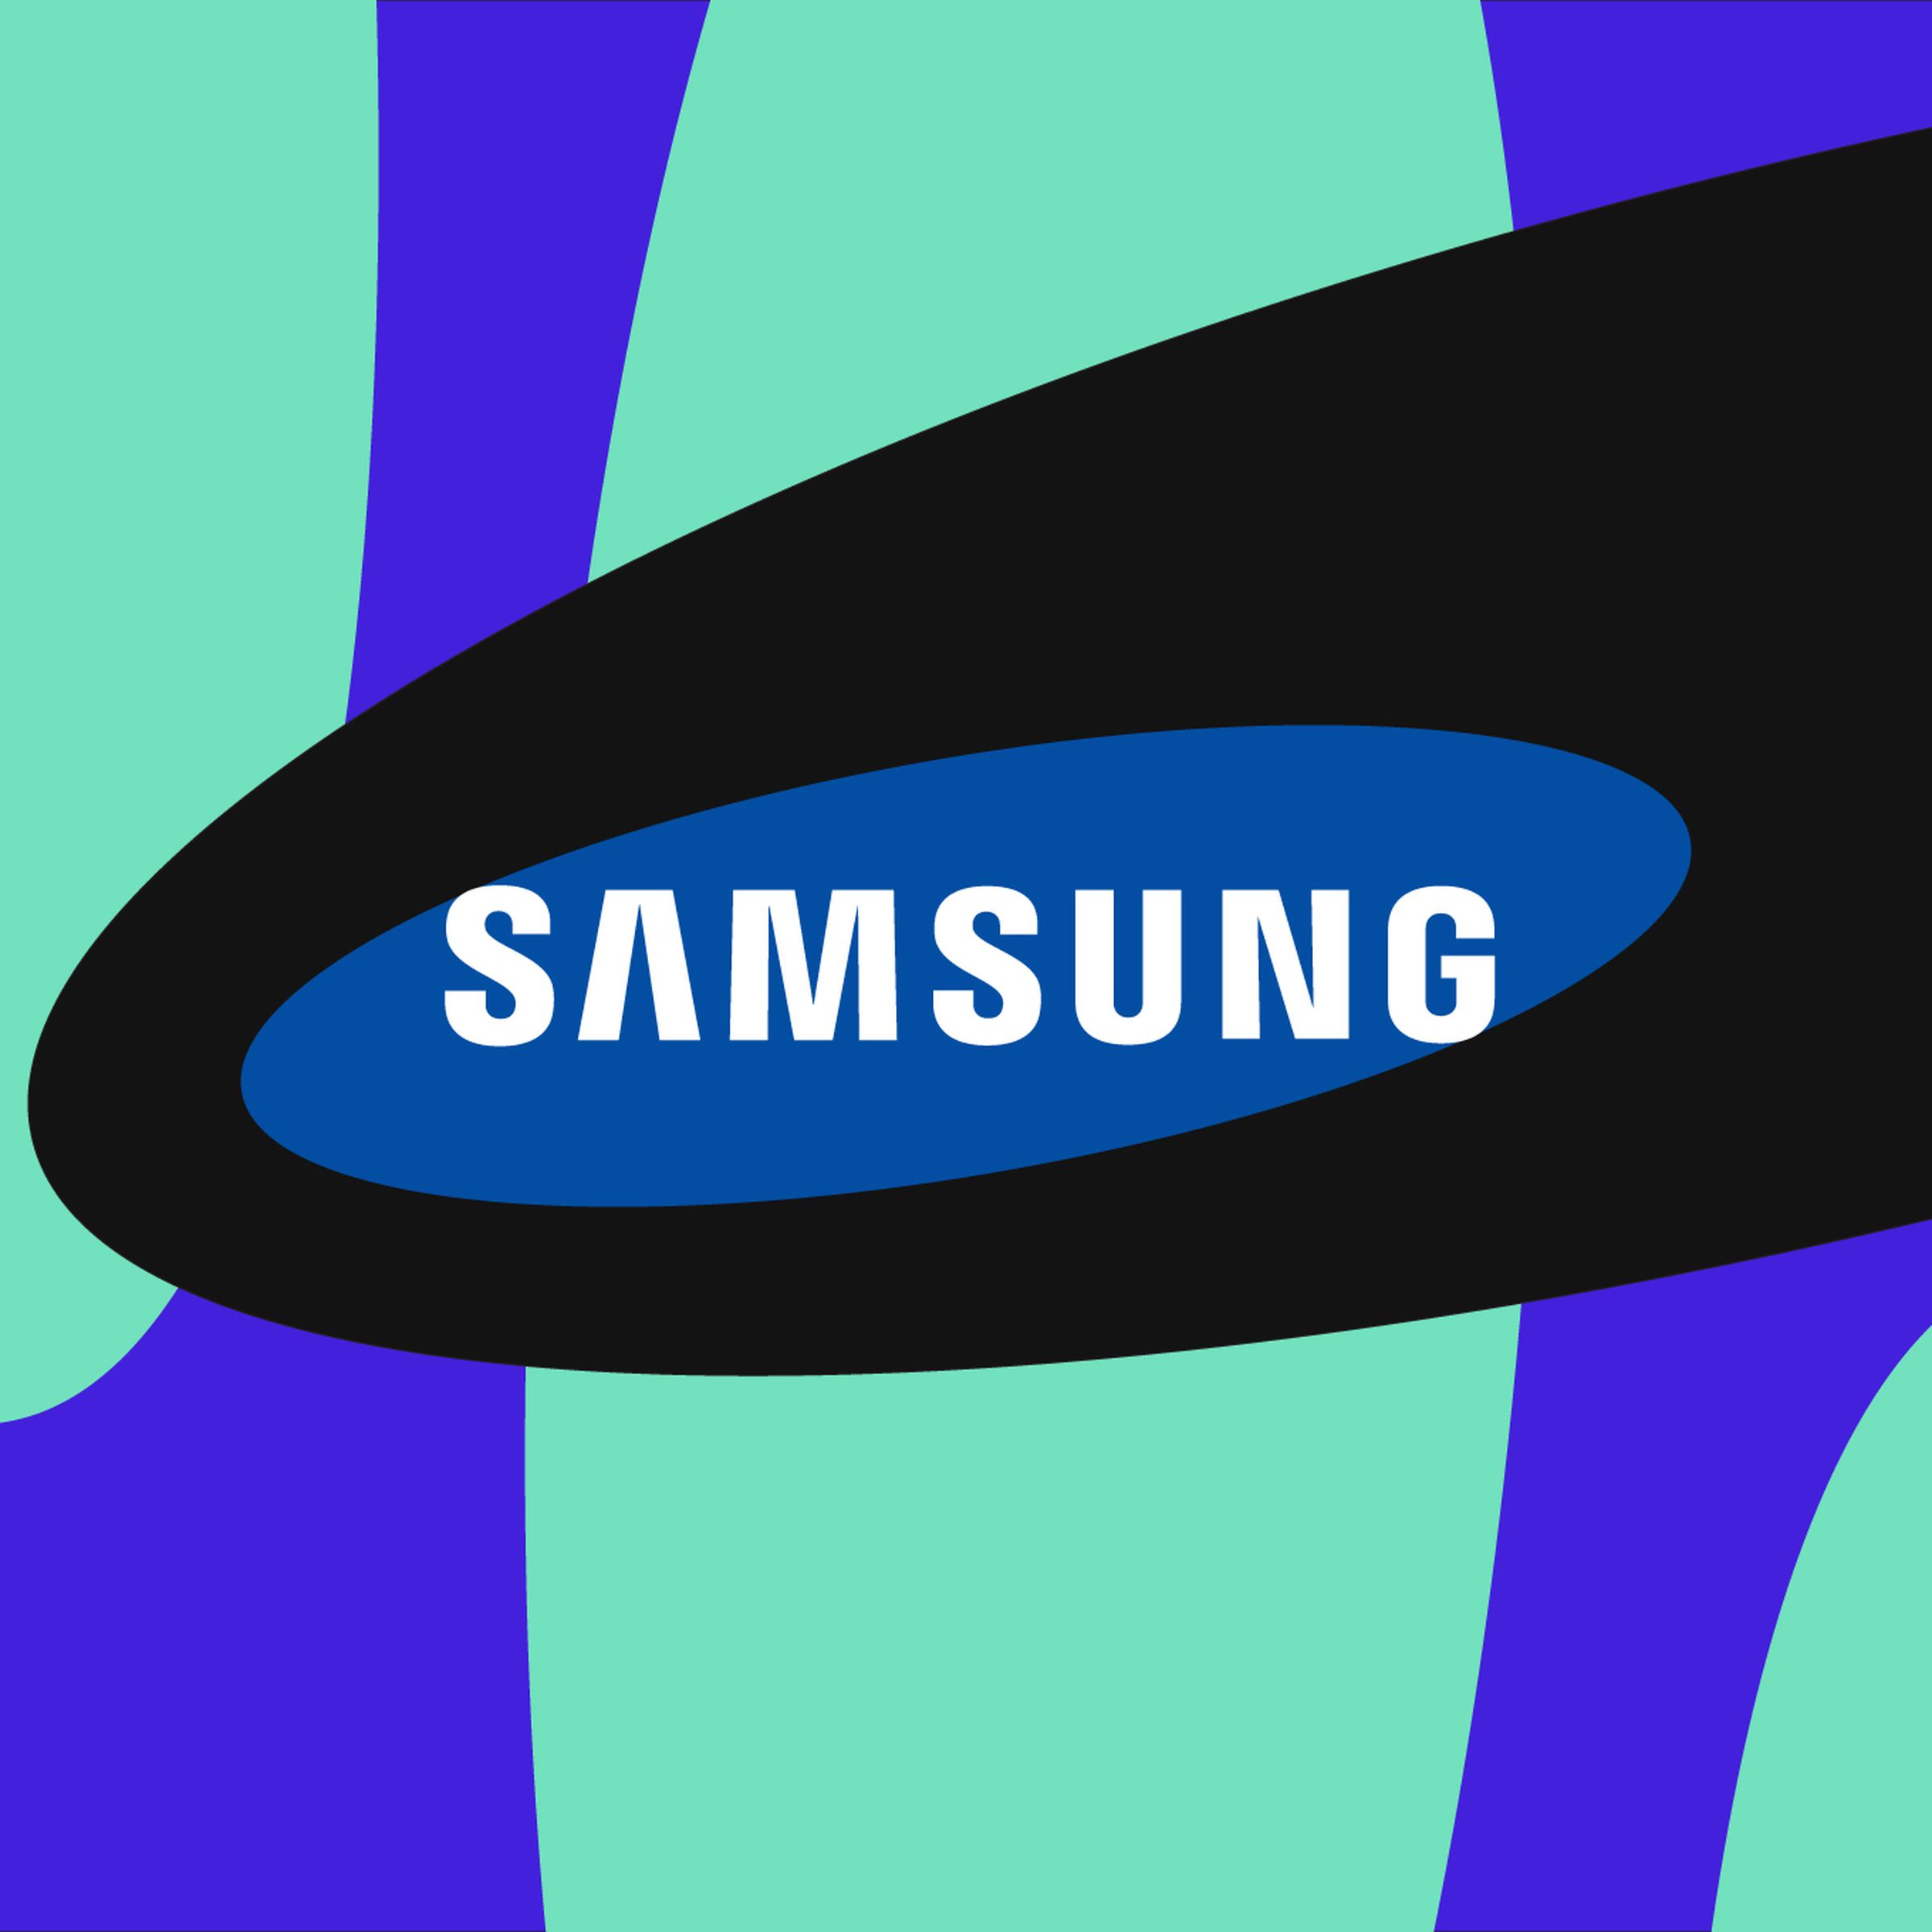 Illustration of Samsung’s logo on a black, blue, and aqua background.